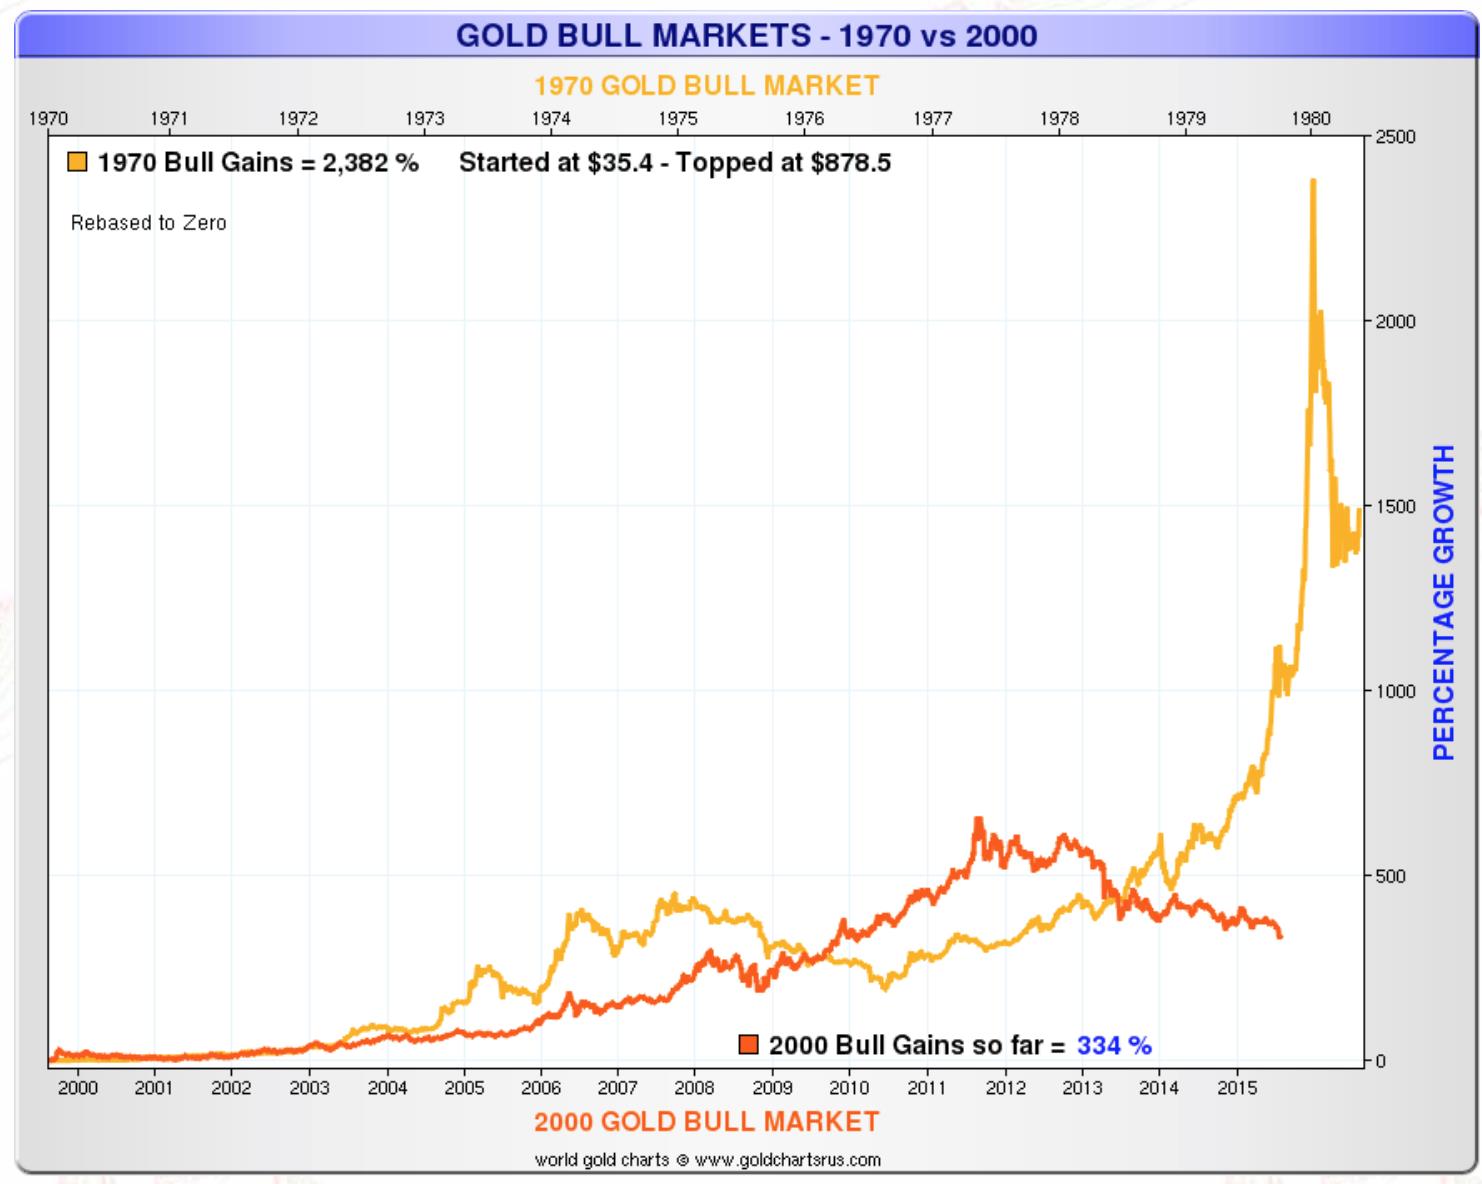 Gold bulls market